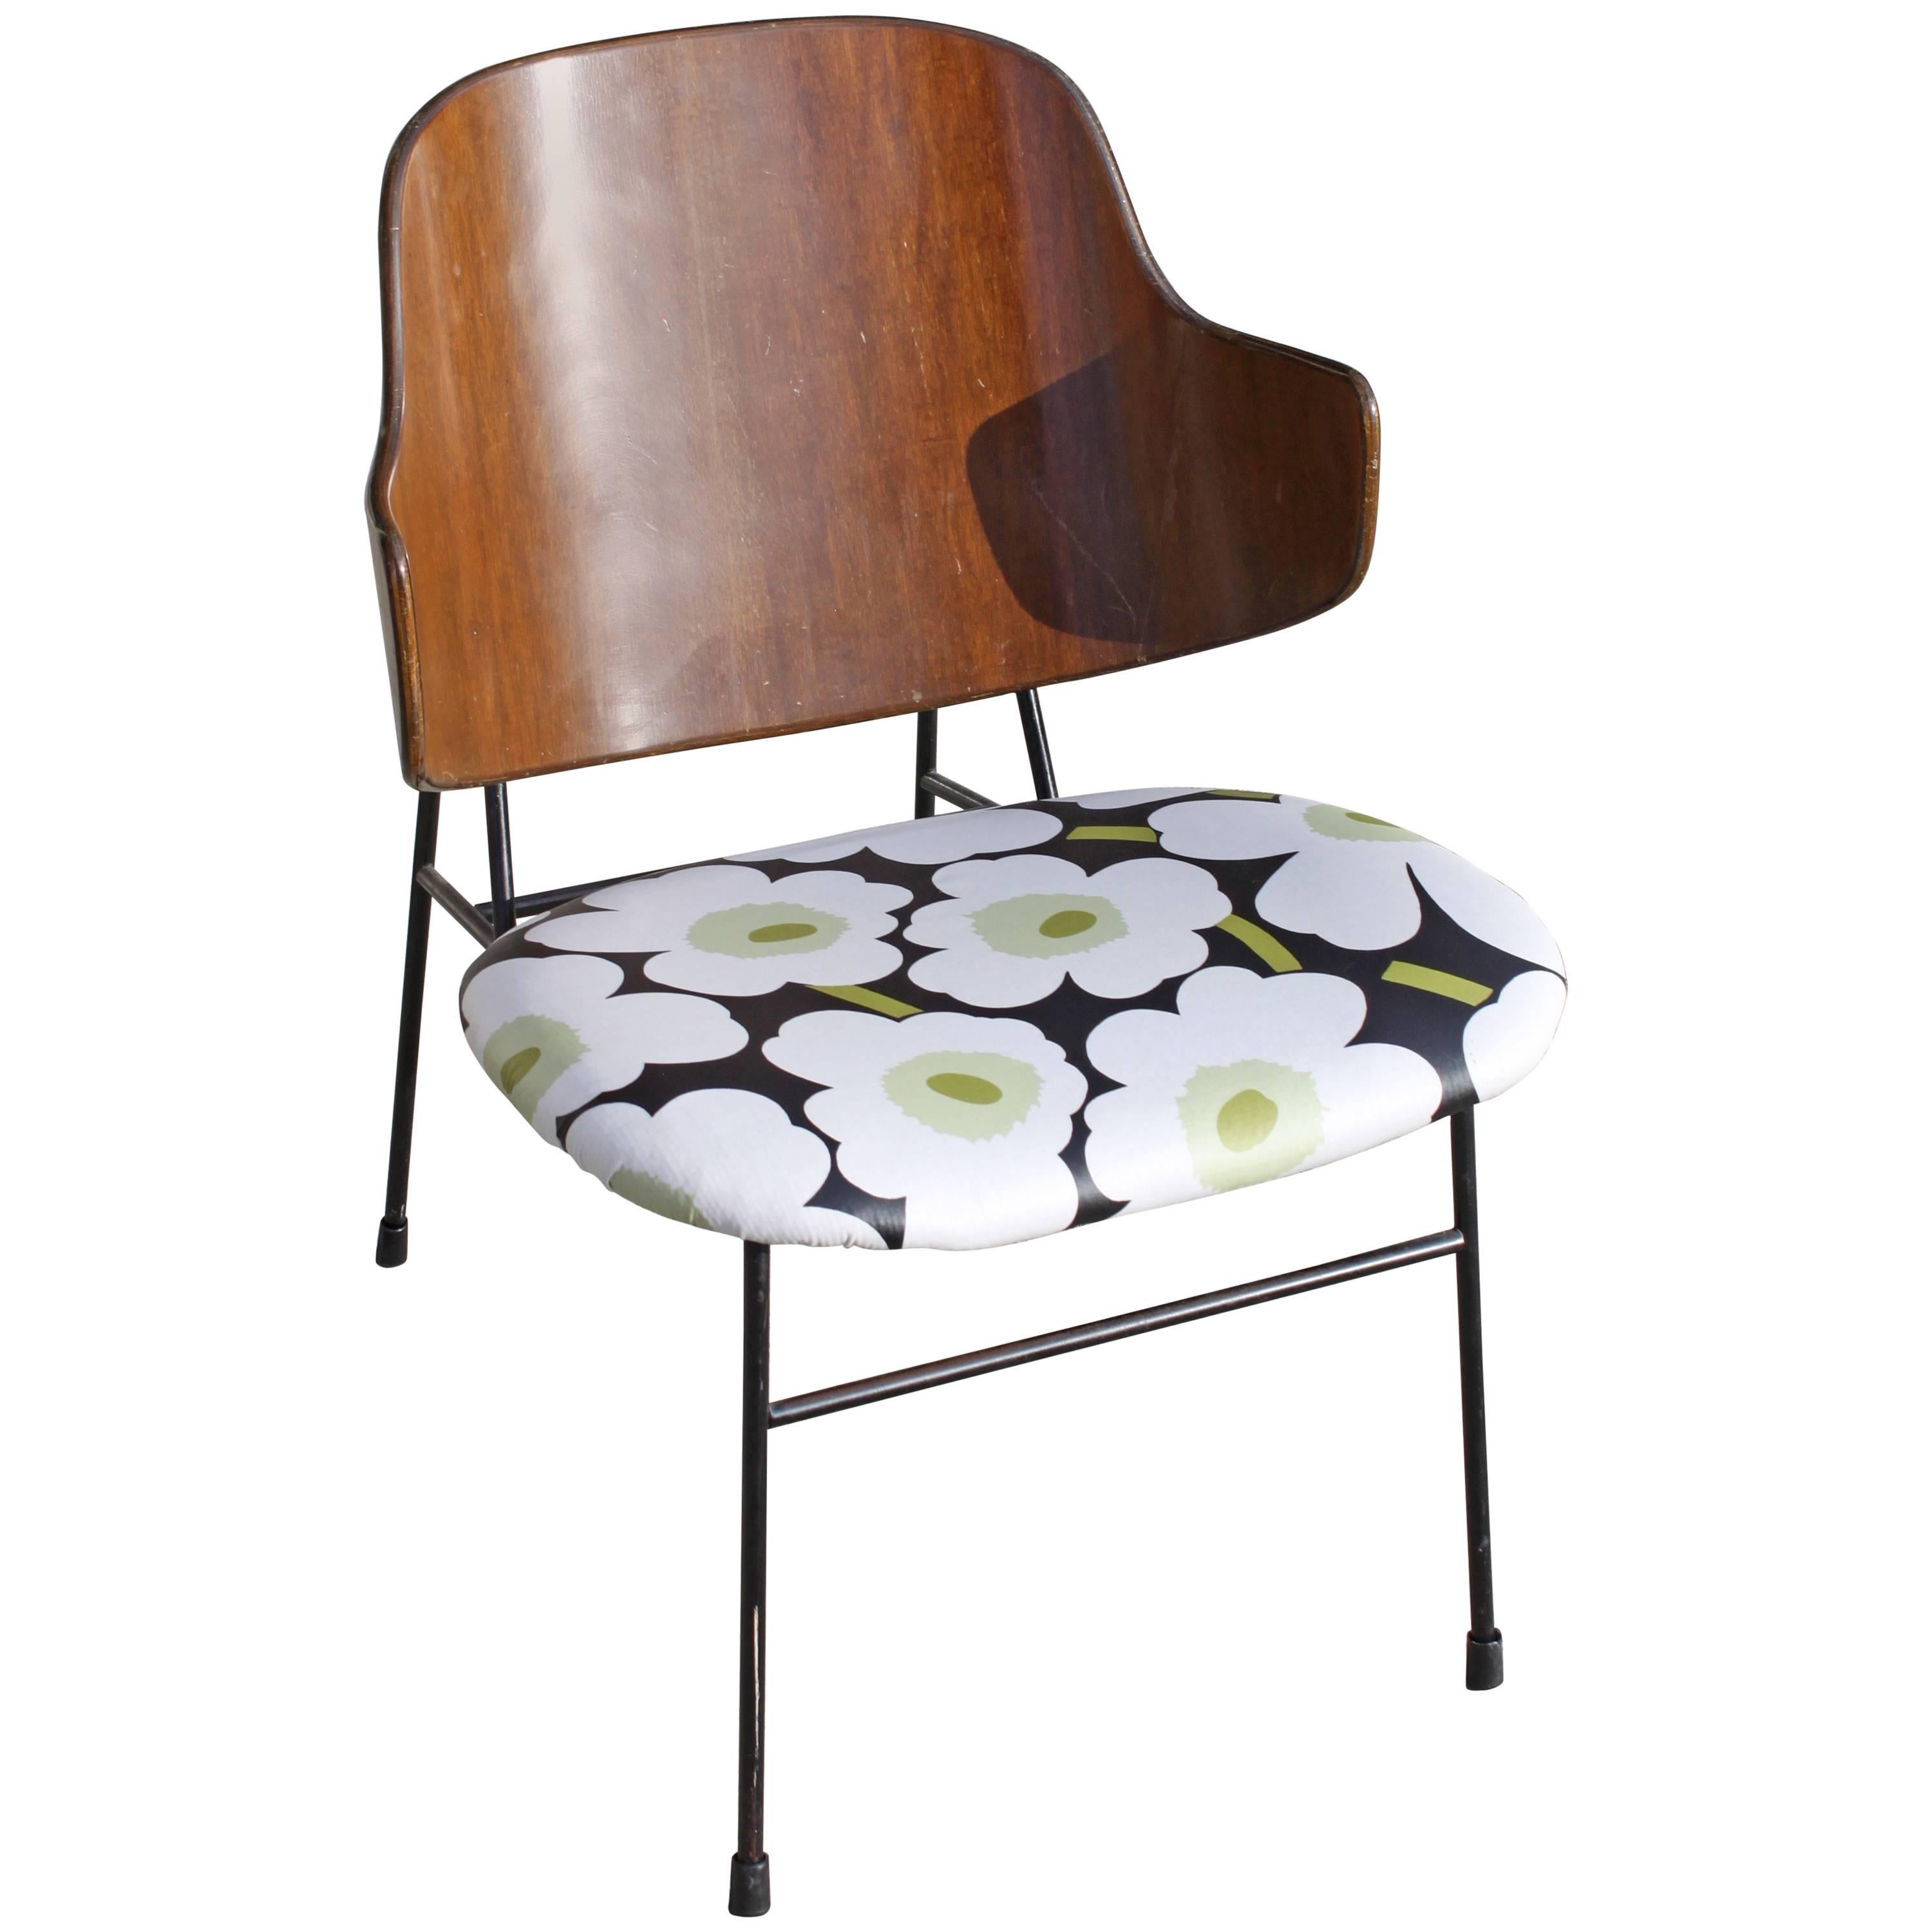 Ib Kofod Larsen 'Penguin' Chair with Marimekko Fabric For Sale